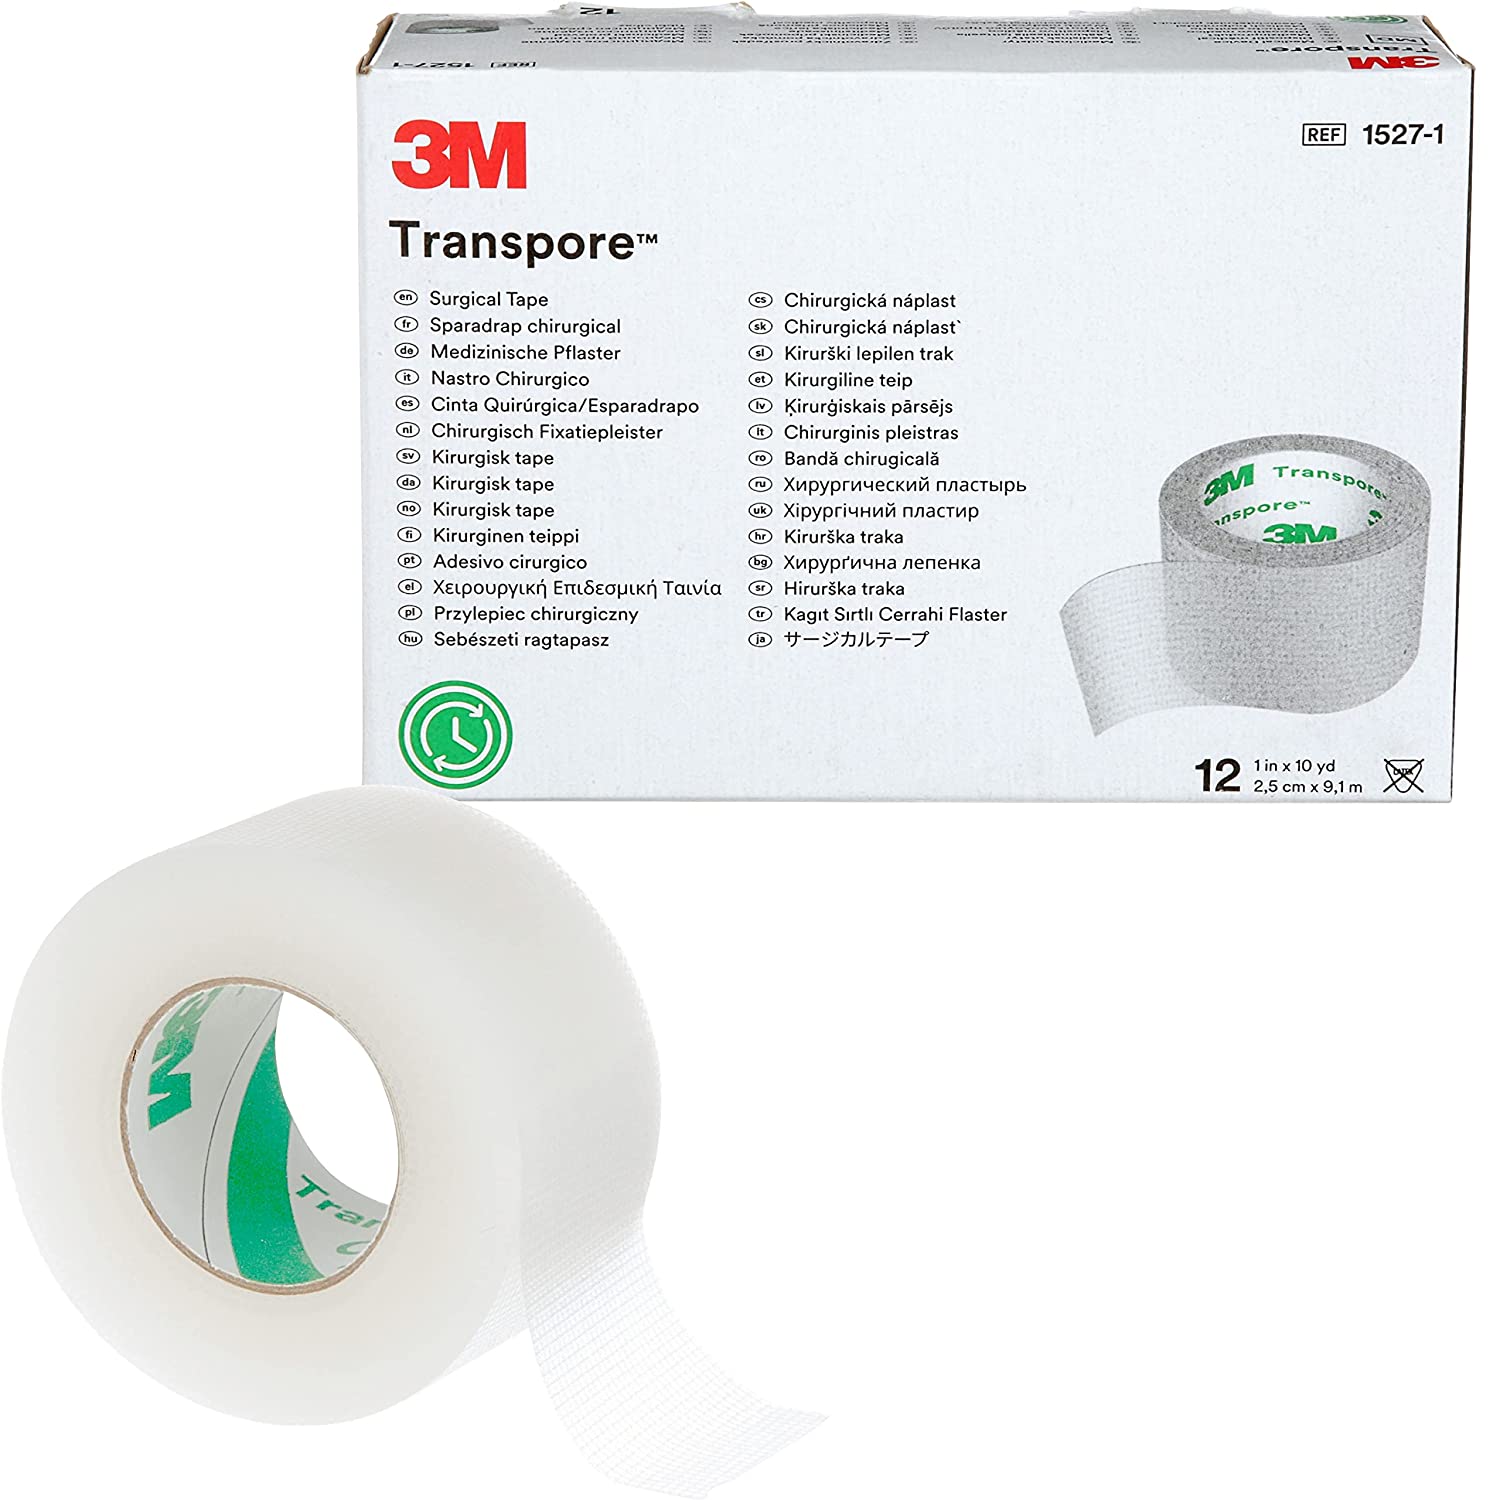 Transpore 1527-1, Surgical Tape, 1 inch x 10 yard (2,5cm x 9,1m), 12 rolls/box